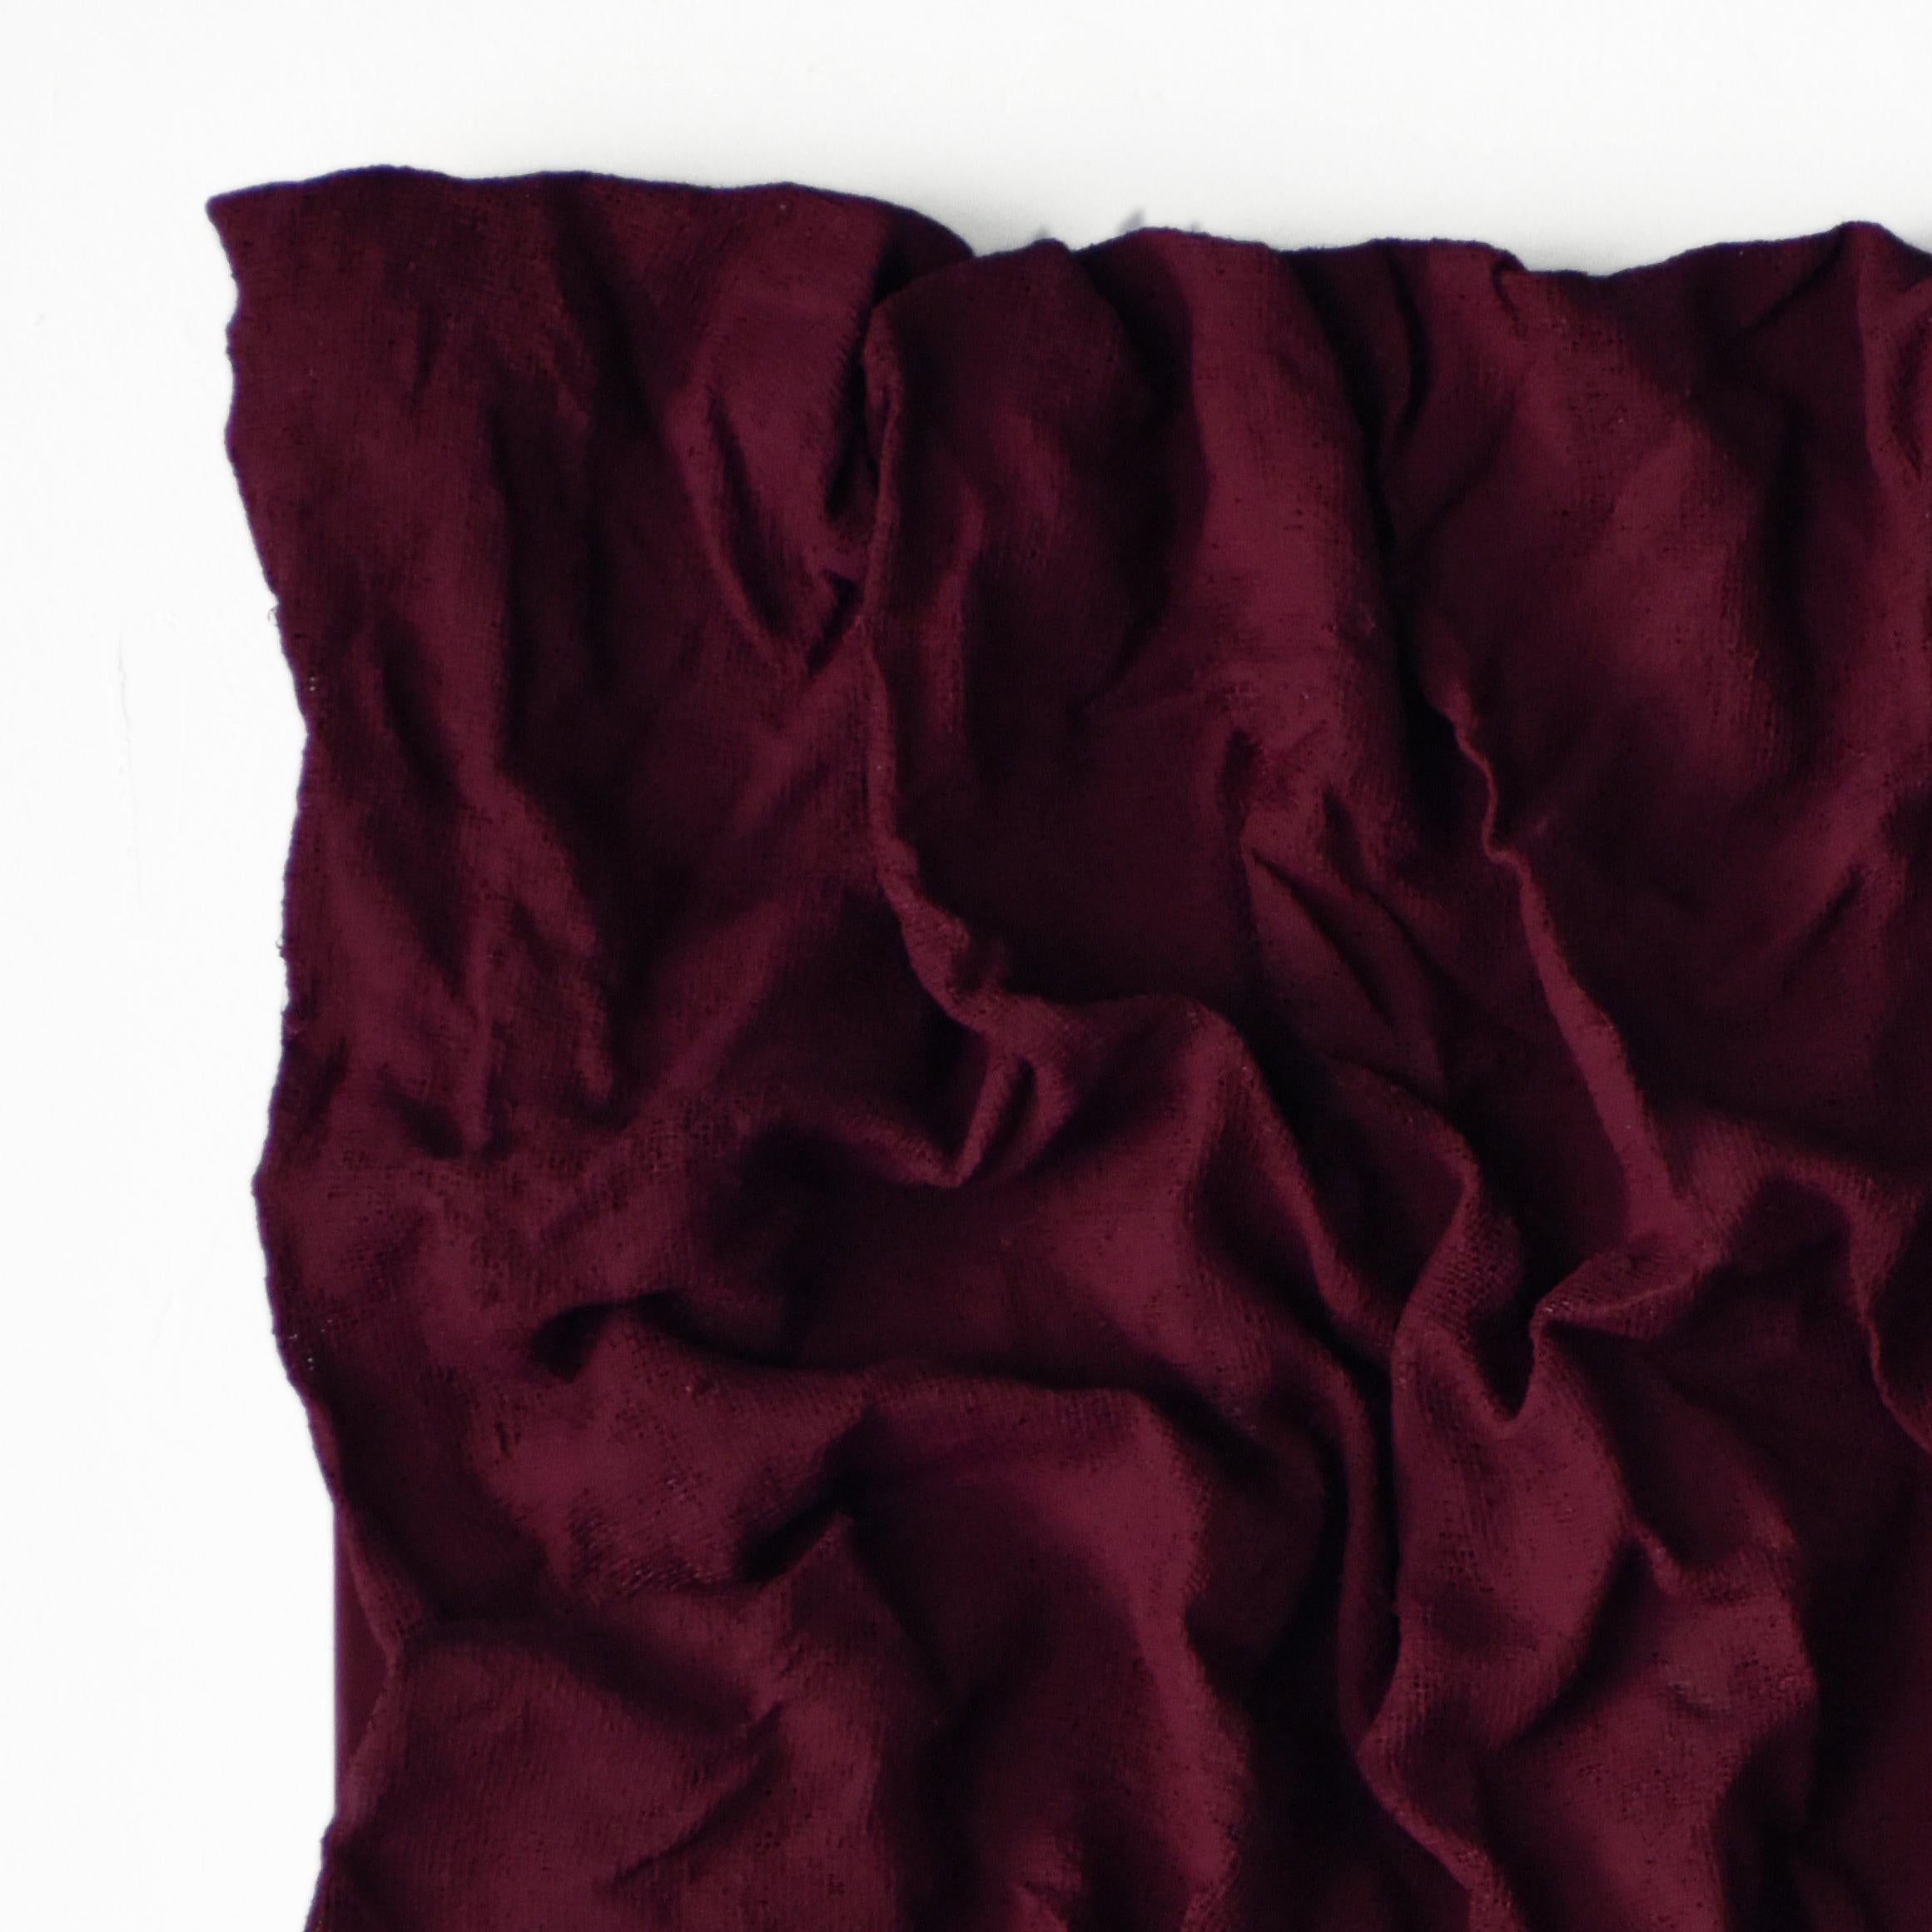 Rasberry Dream Folds (hardened fabric, contemporary art design, wall sculpture) - Sculpture by Chloe Hedden